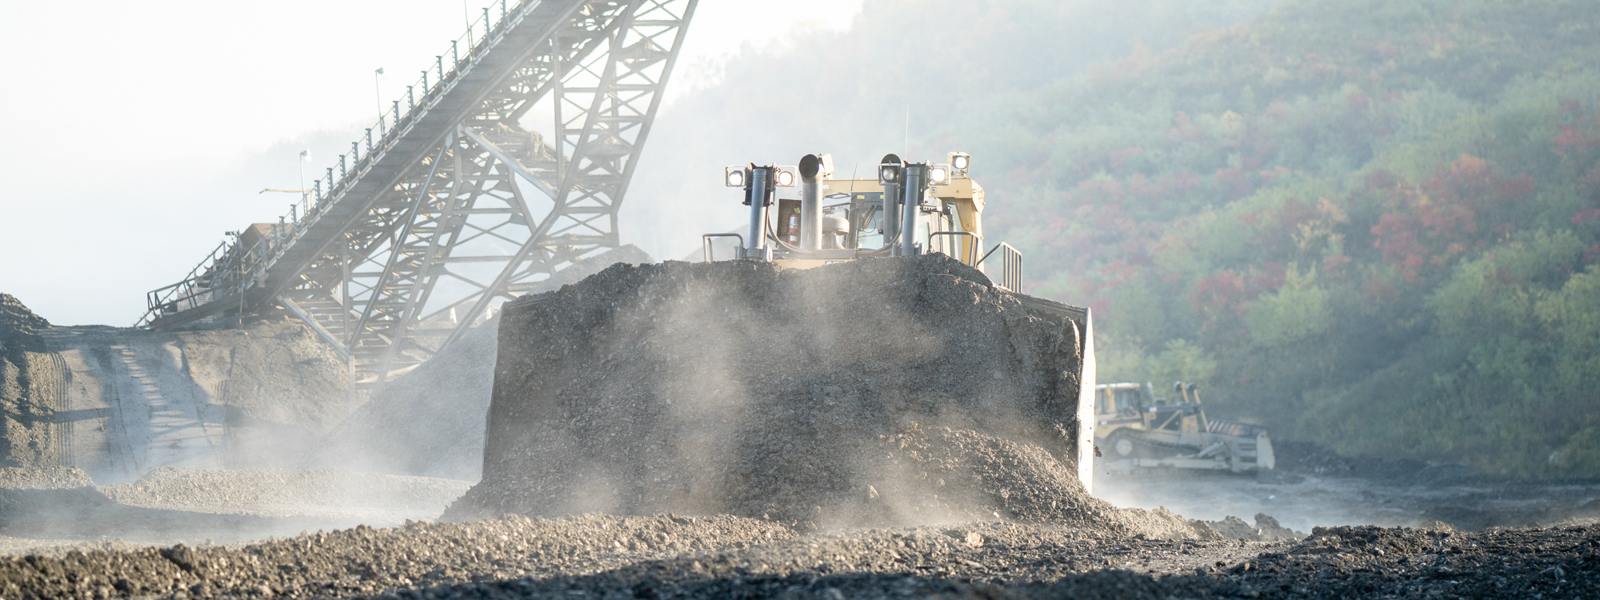 Bulldozer Moving Dirt At Mining/quarry Site